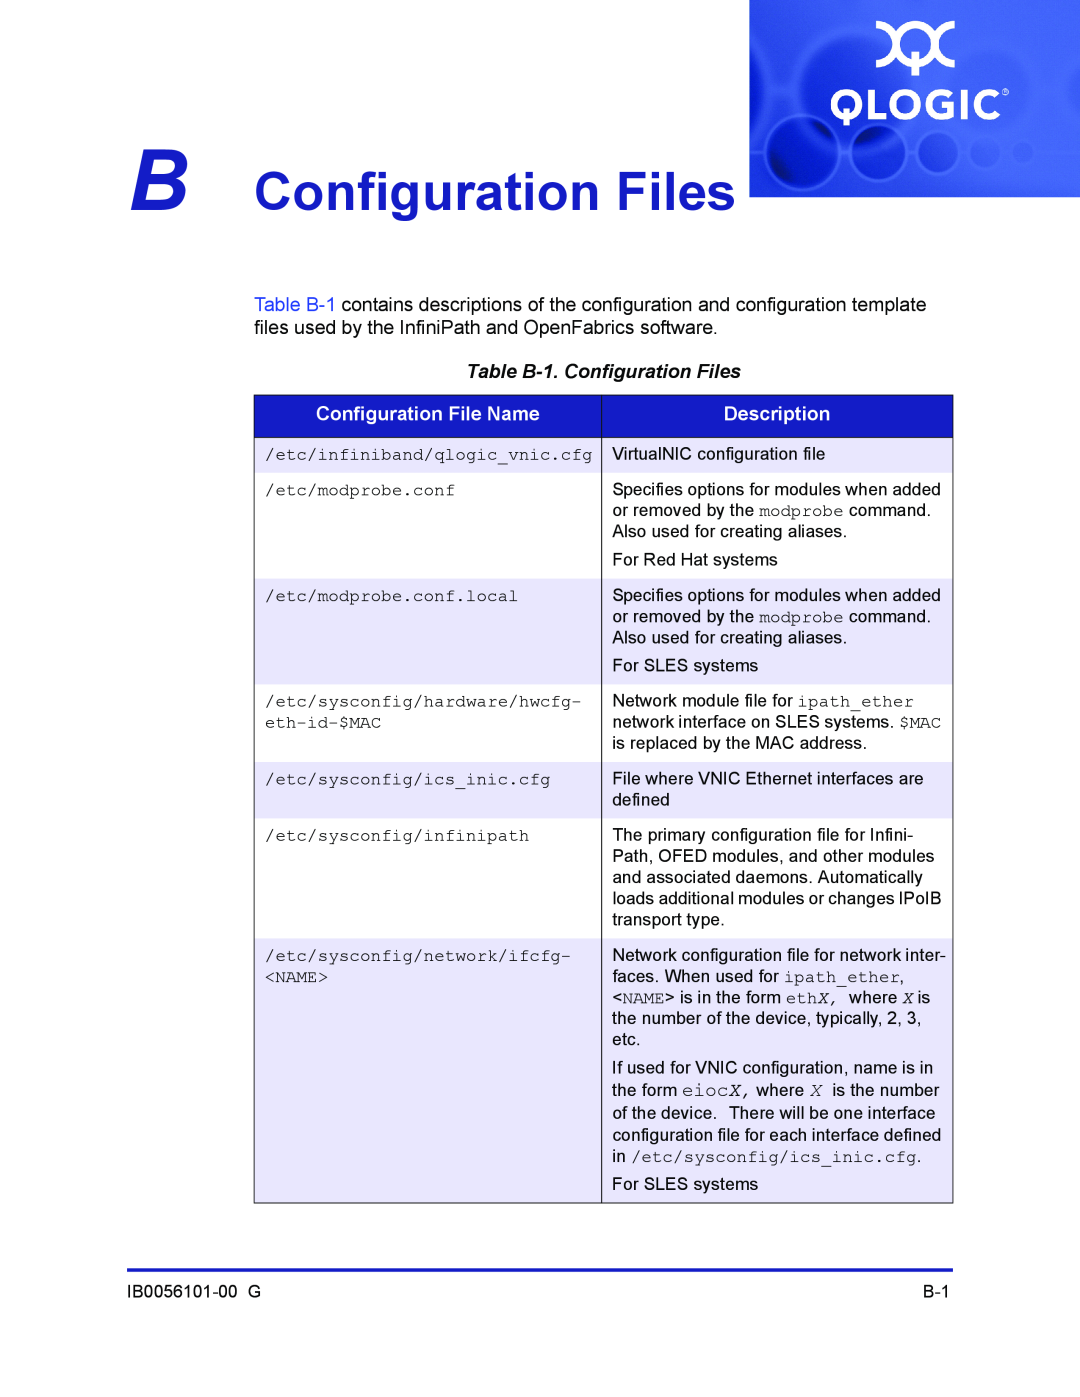 Q-Logic IB0056101-00 G manual B Configuration Files, Table B-1. Configuration Files, Configuration File Name, Description 